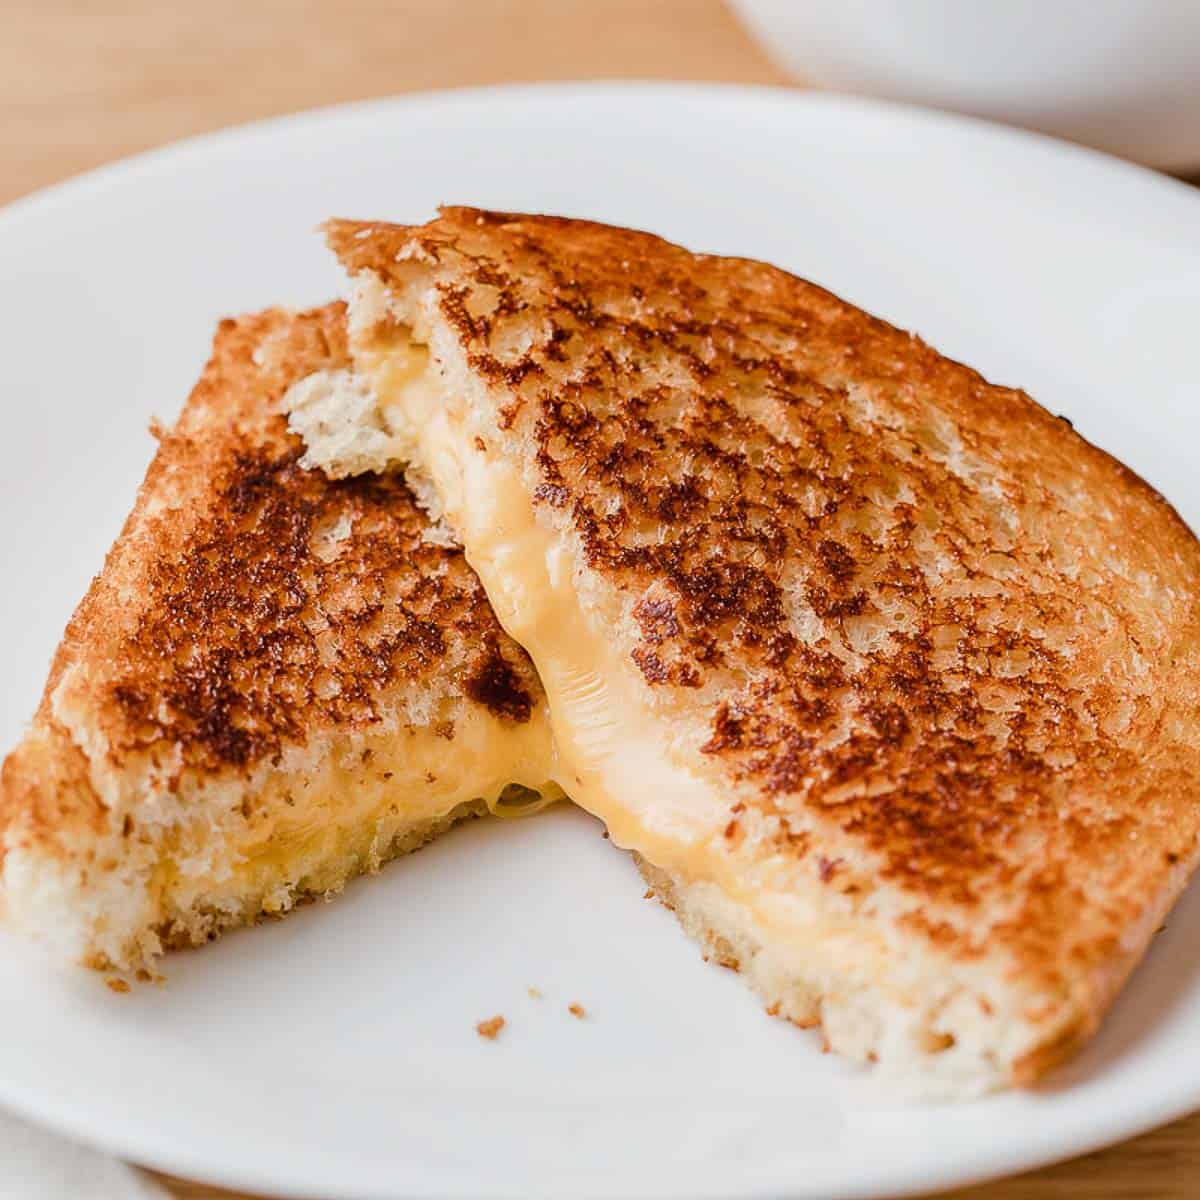 https://littlespoonfarm.com/wp-content/uploads/2021/01/best-grilled-cheese-sandwich-recipe.jpg